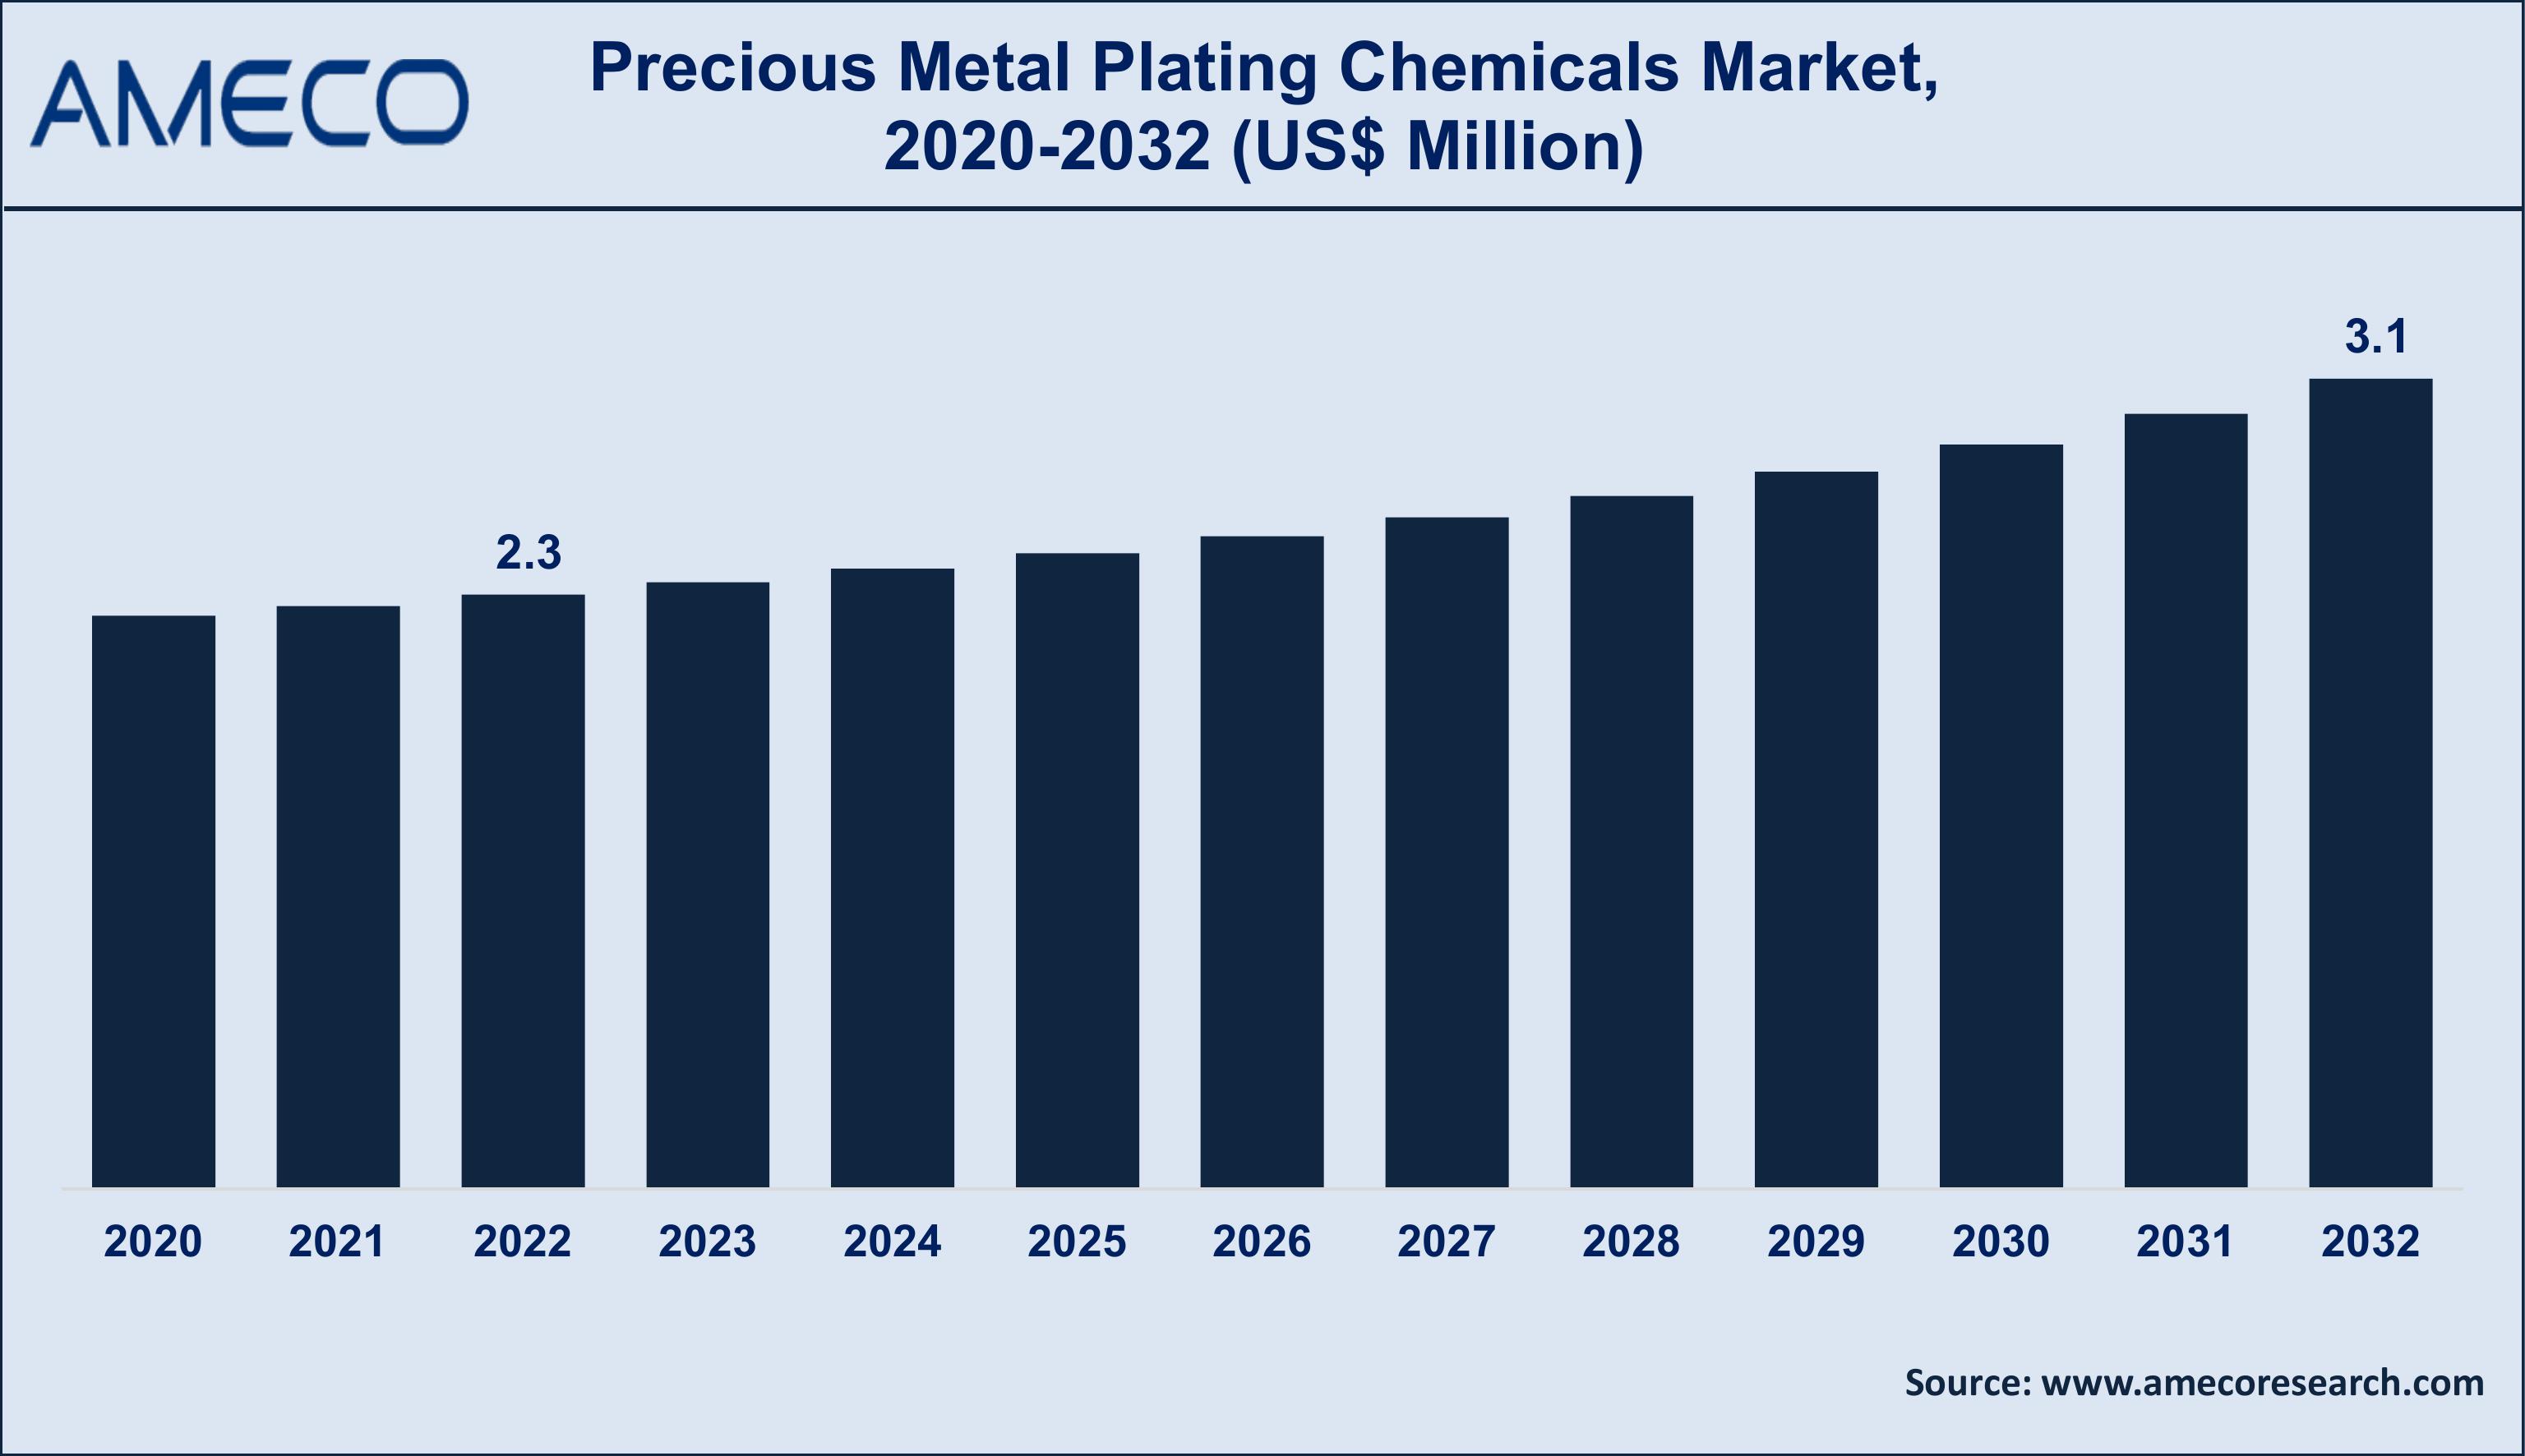 Precious Metal Plating Chemicals Market Dynamics